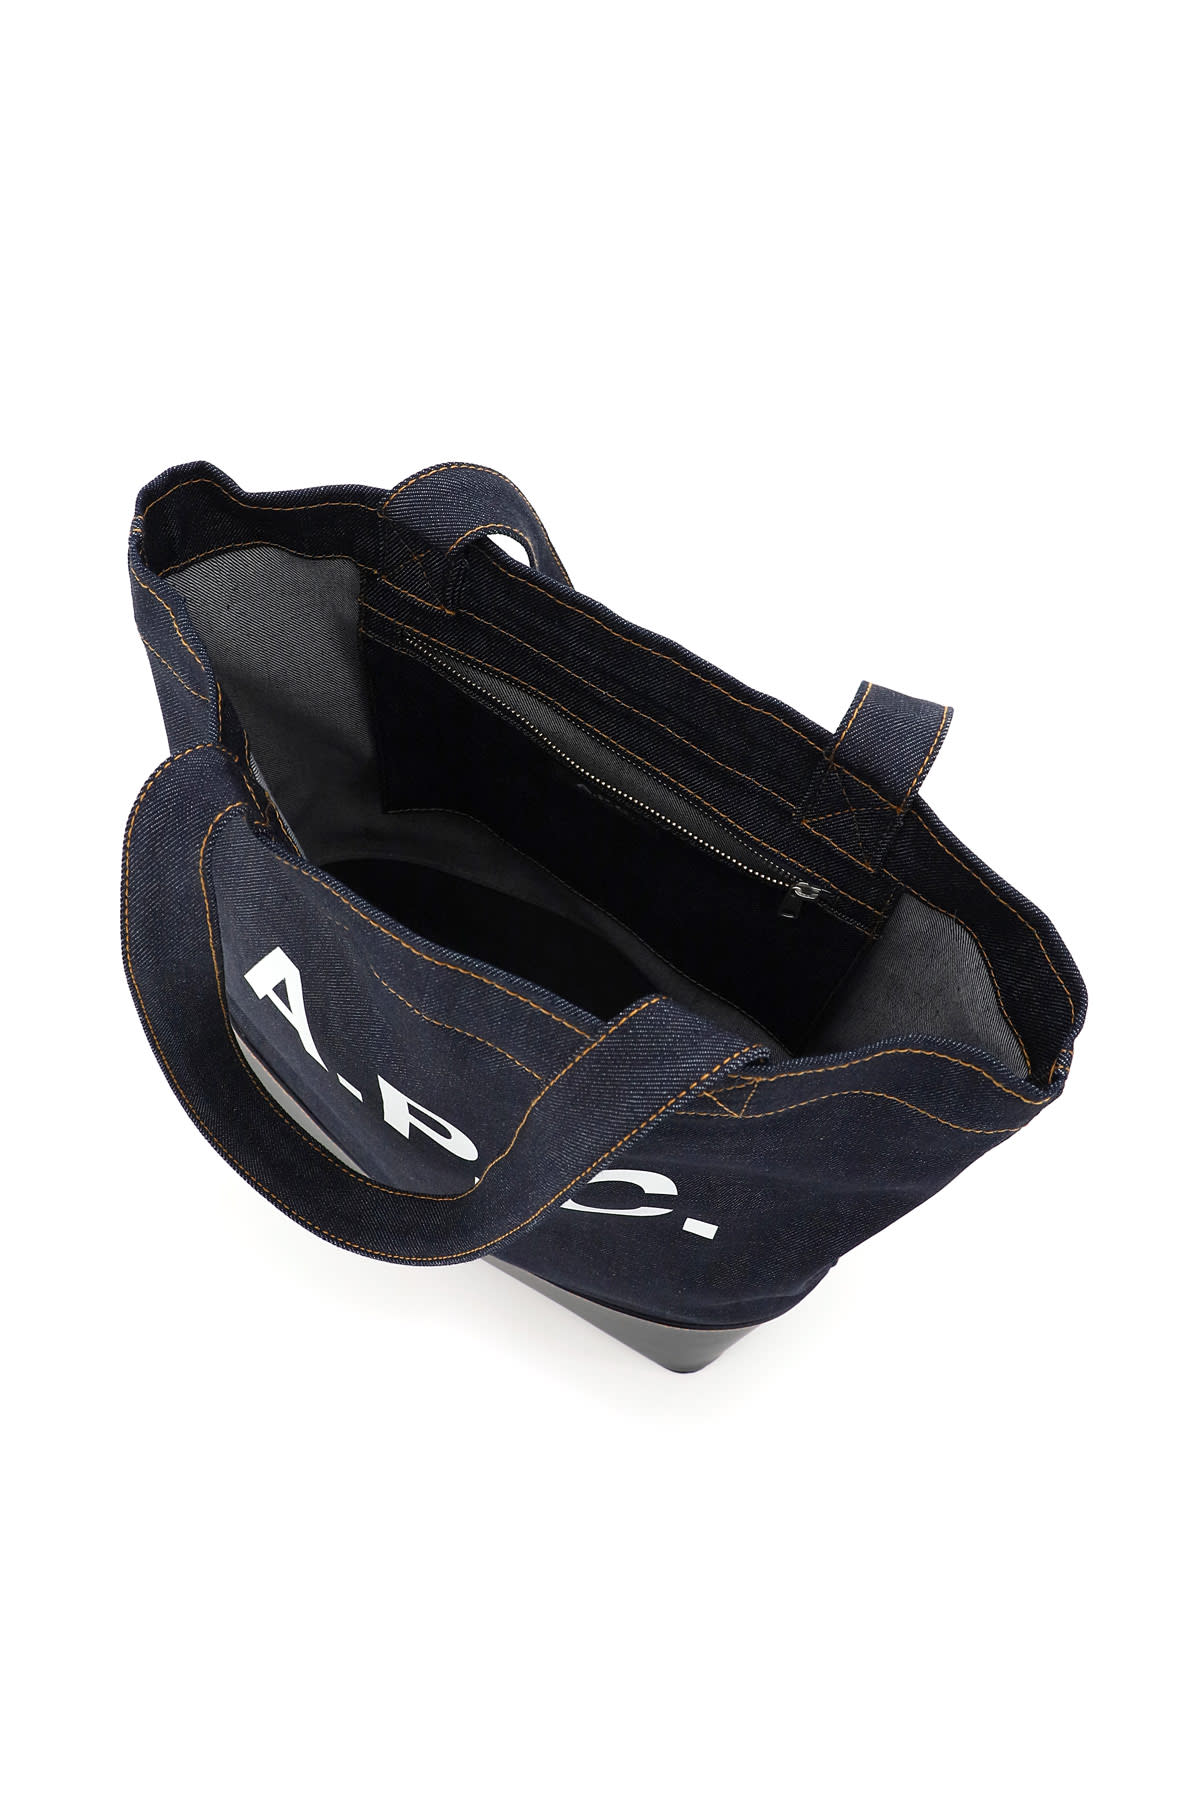 Shop Apc Axel Denim Tote Bag In Dark Navy (blue)